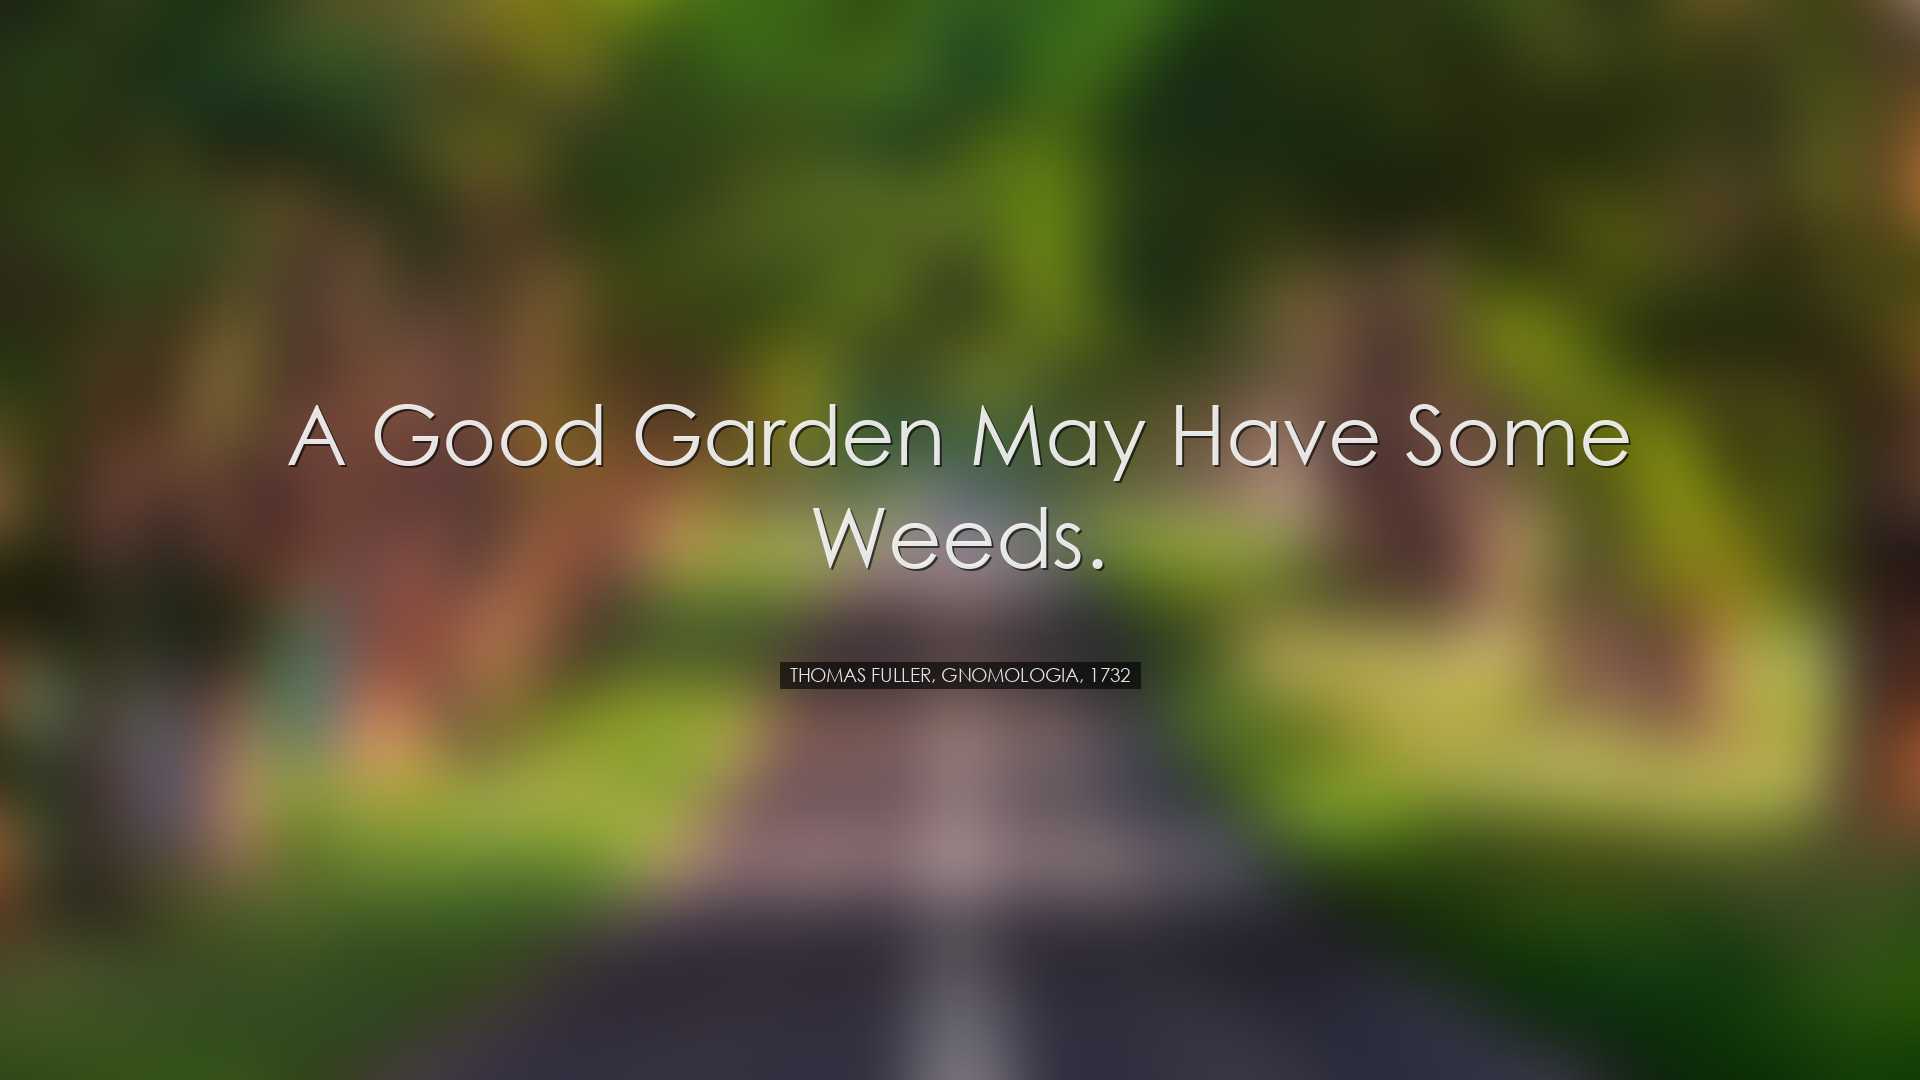 A good garden may have some weeds. - Thomas Fuller, Gnomologia, 17